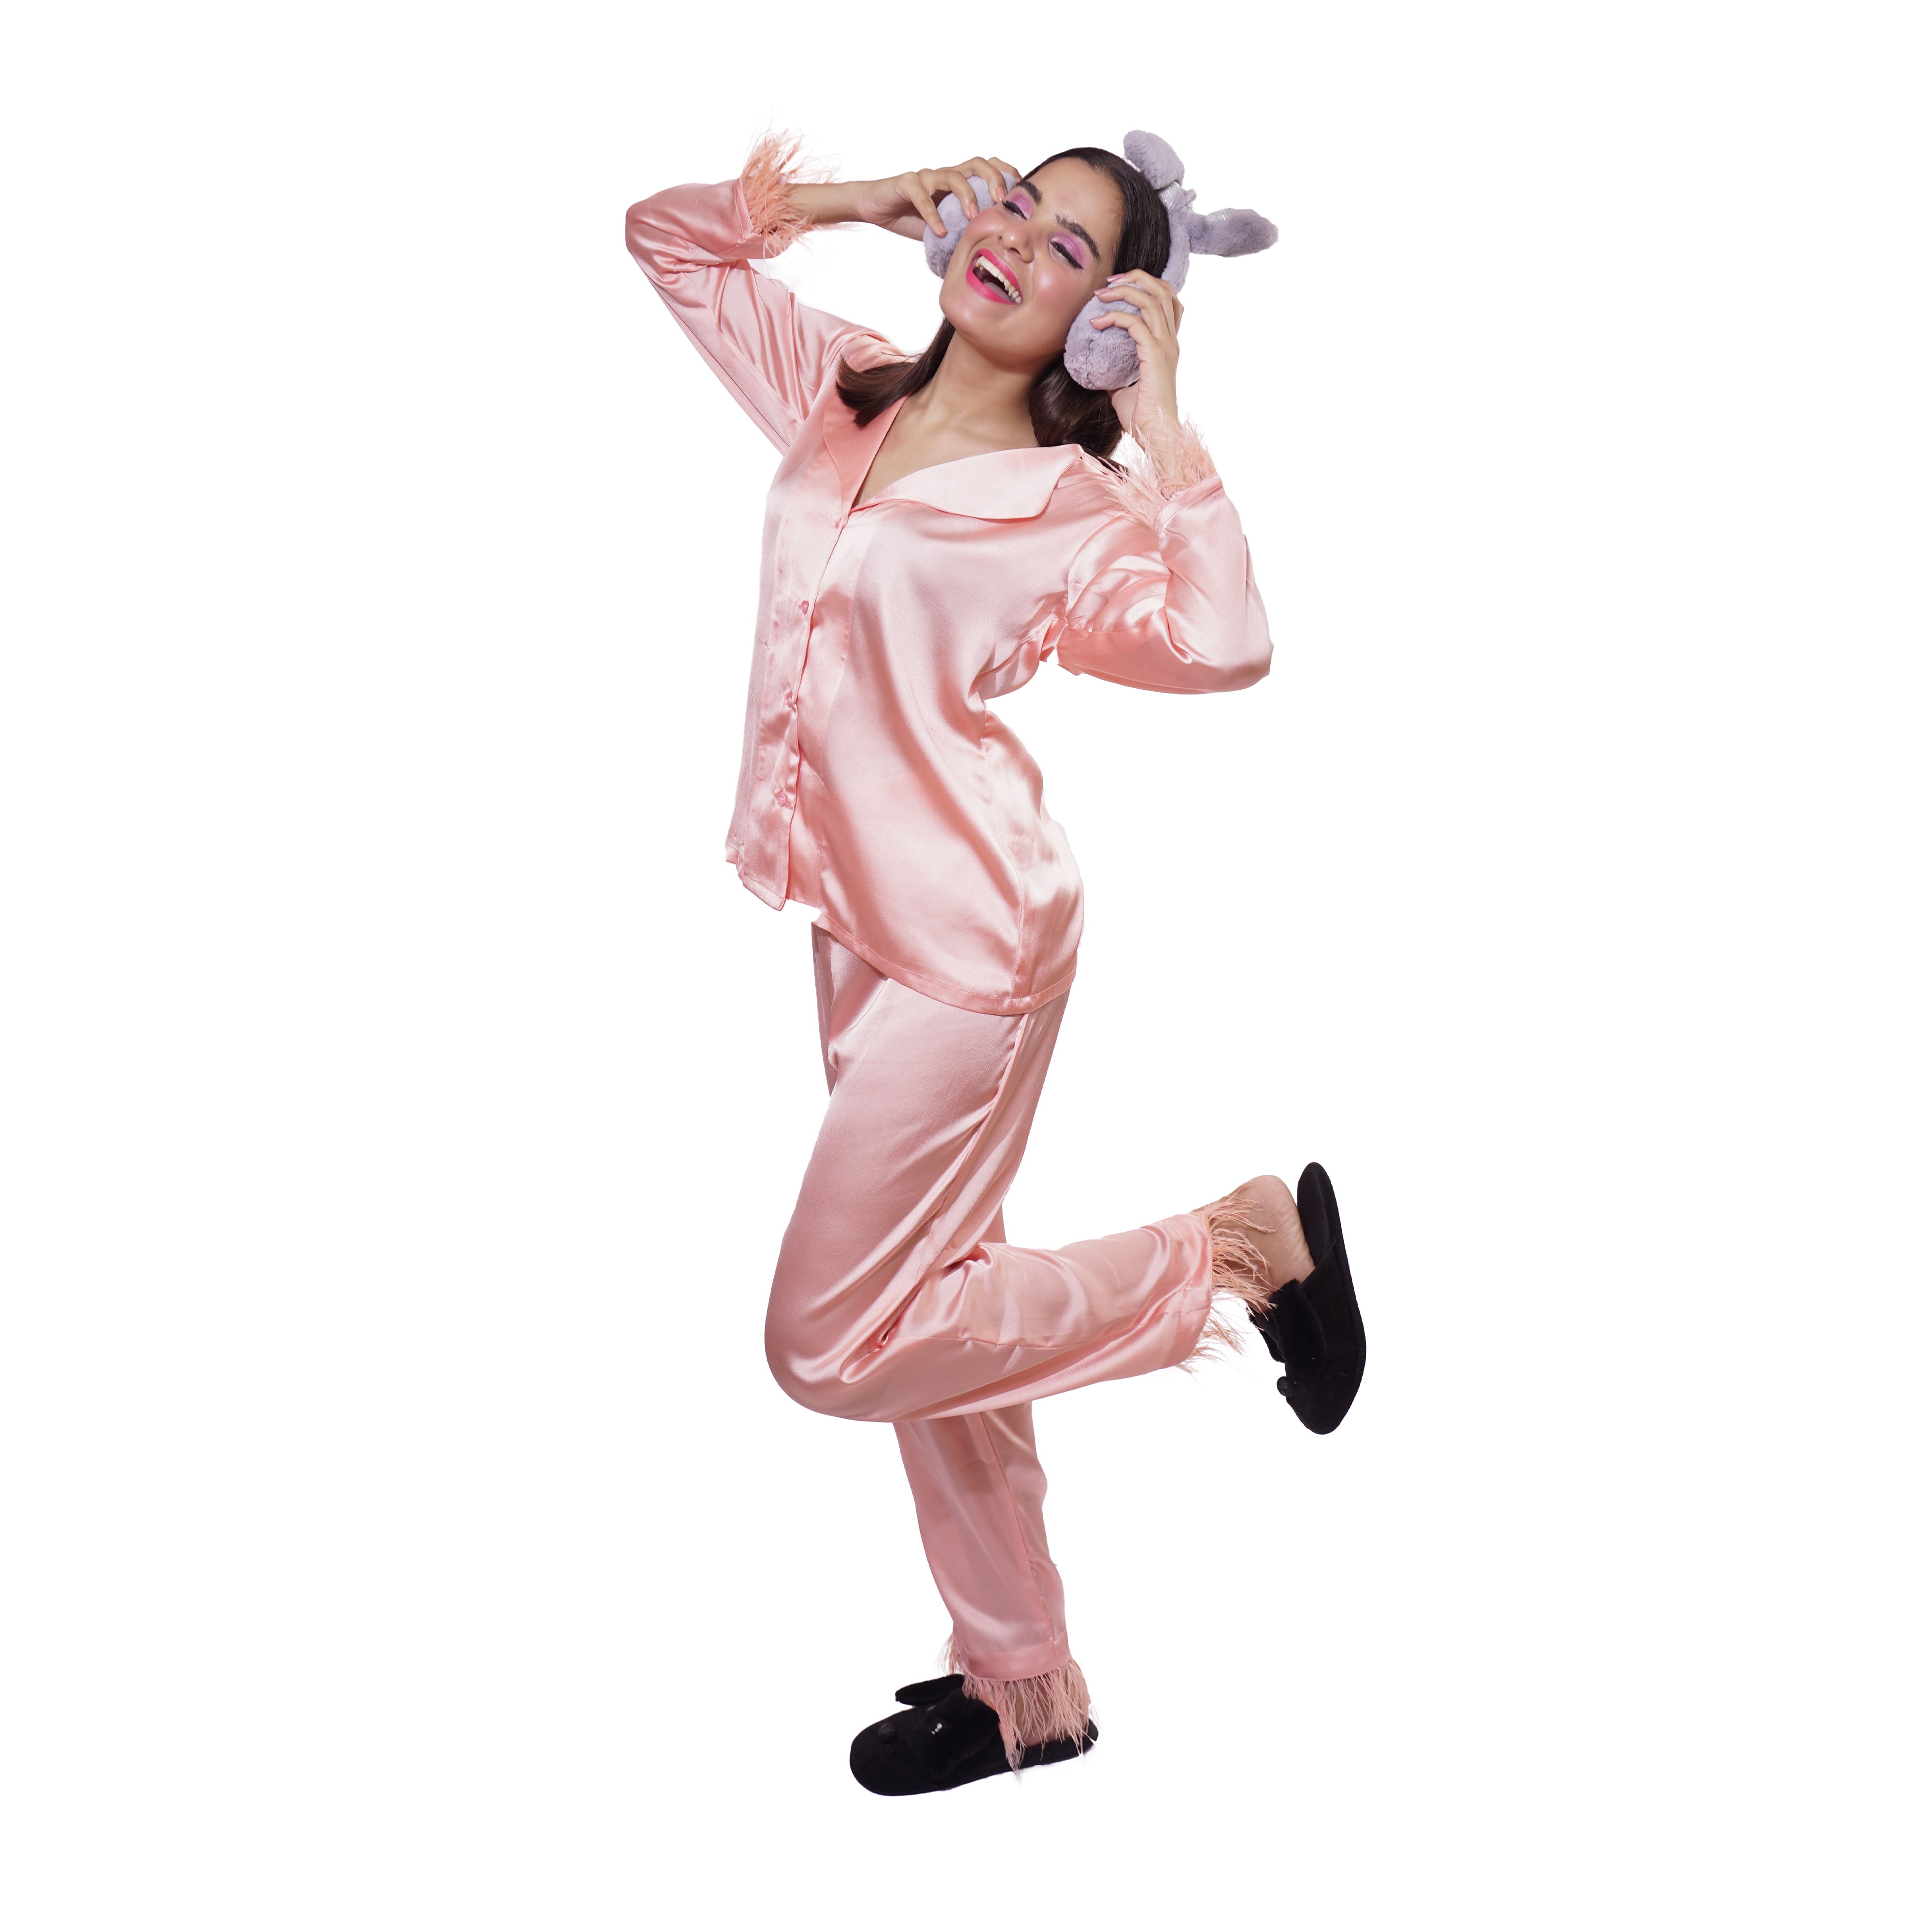 Peach Satin  Ankle Length Satin Night Suit/ Pajama Set with Feathers on sleeve